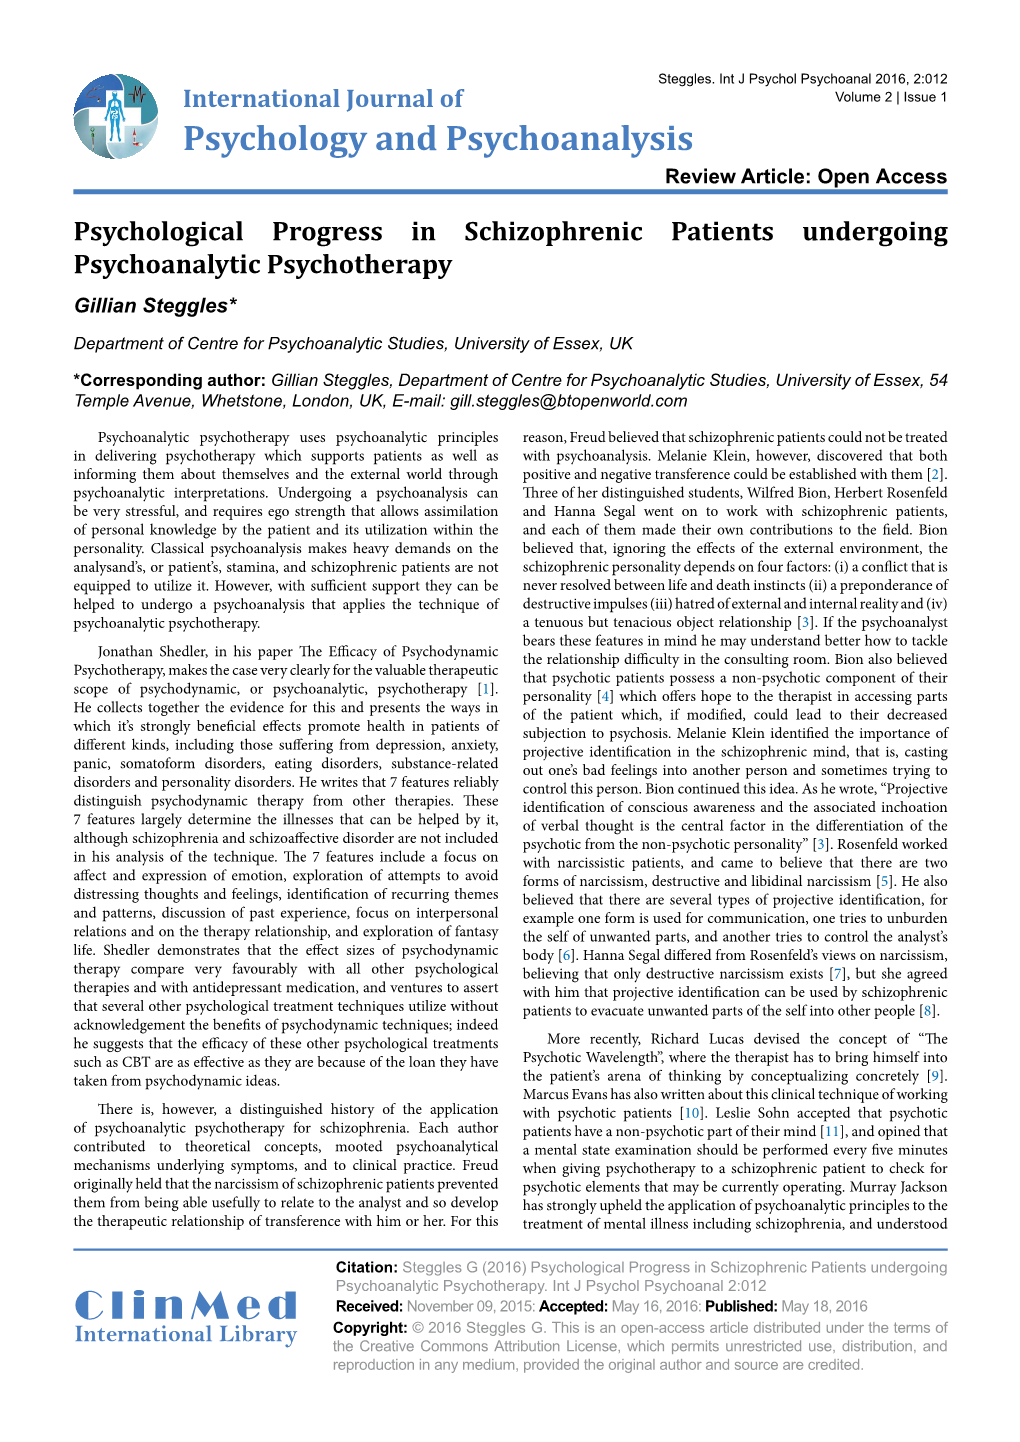 Psychological Progress in Schizophrenic Patients Undergoing Psychoanalytic Psychotherapy Gillian Steggles*